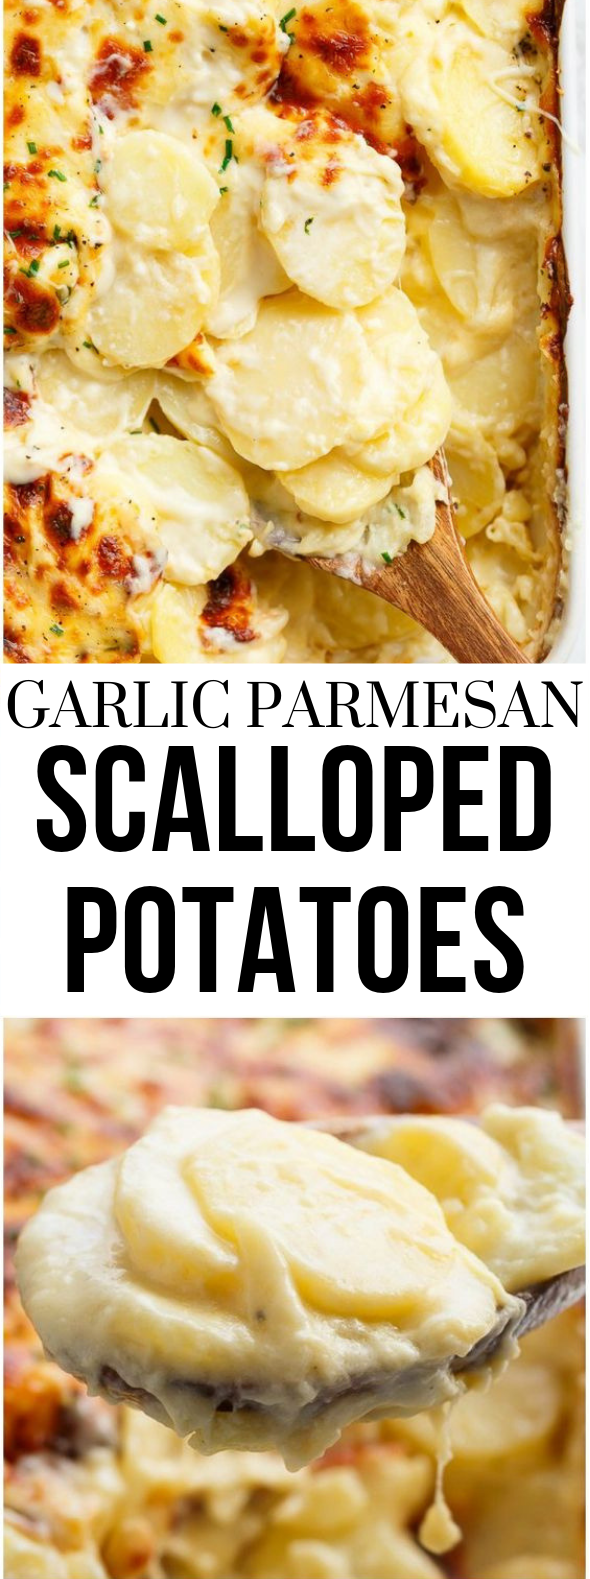 garlic parmesan scalloped potatoes #meal #delicious